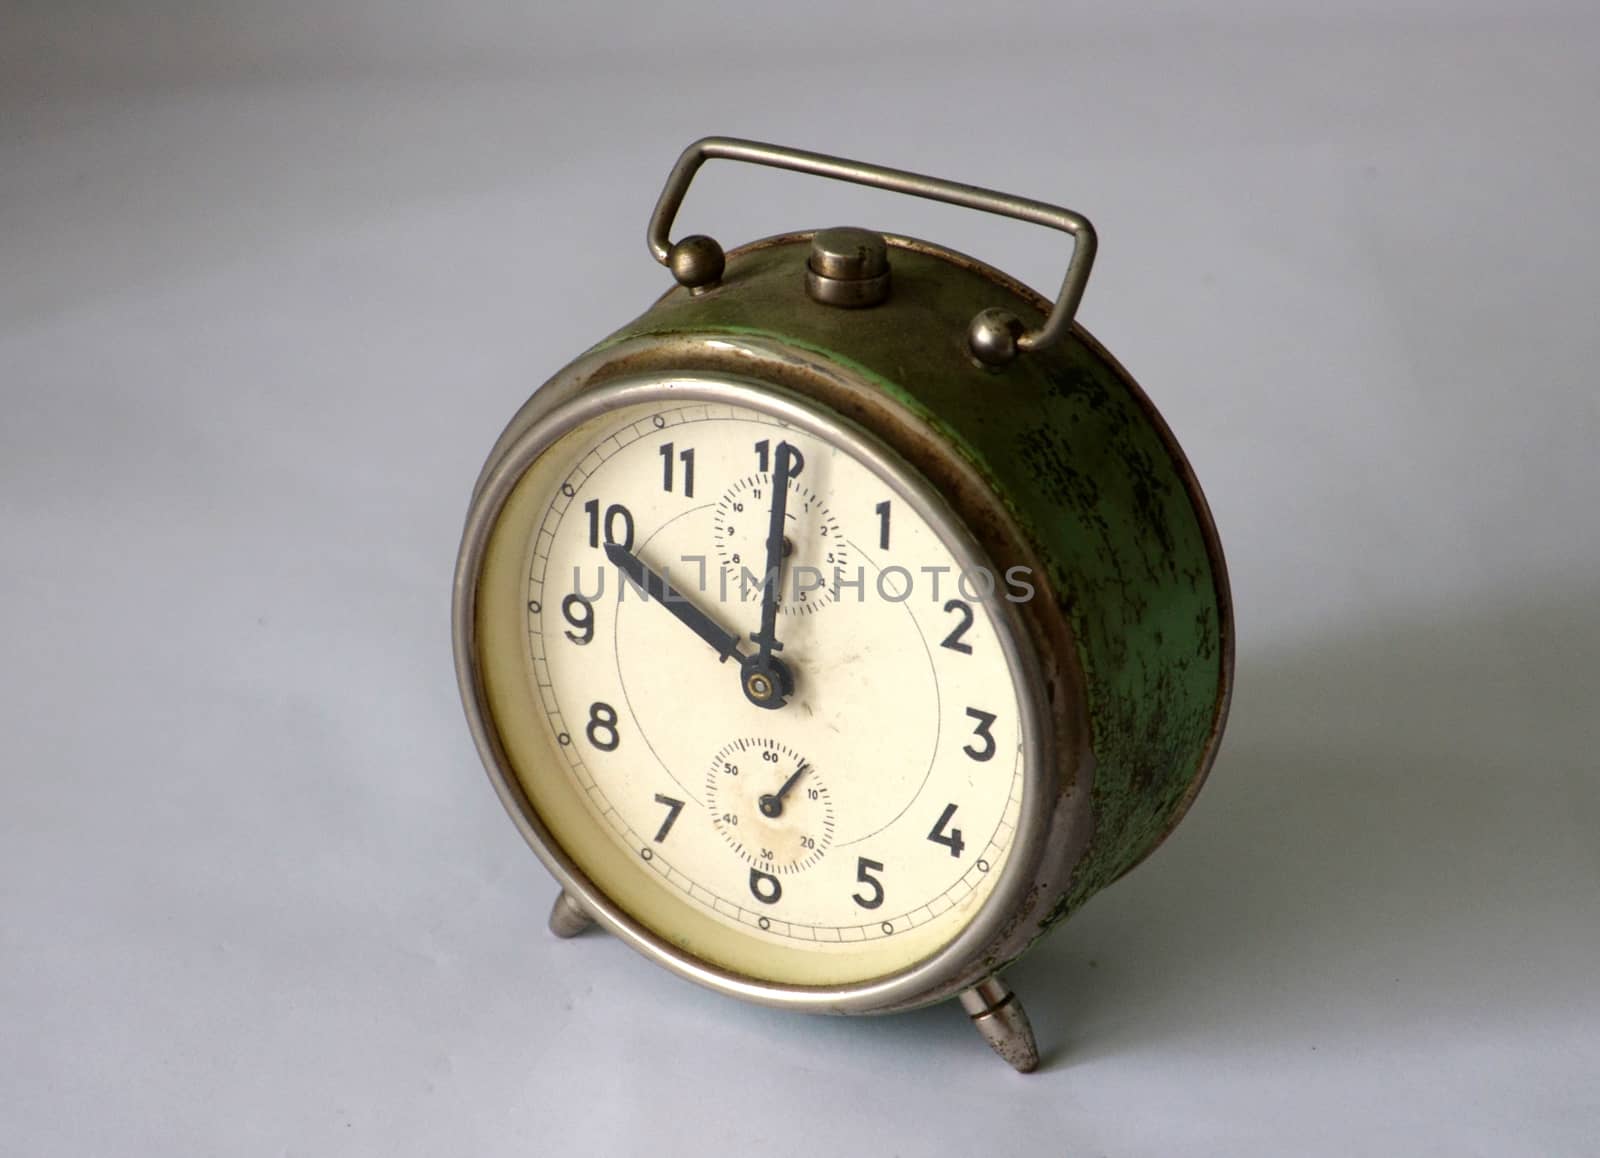 Old alarm clock by nehru